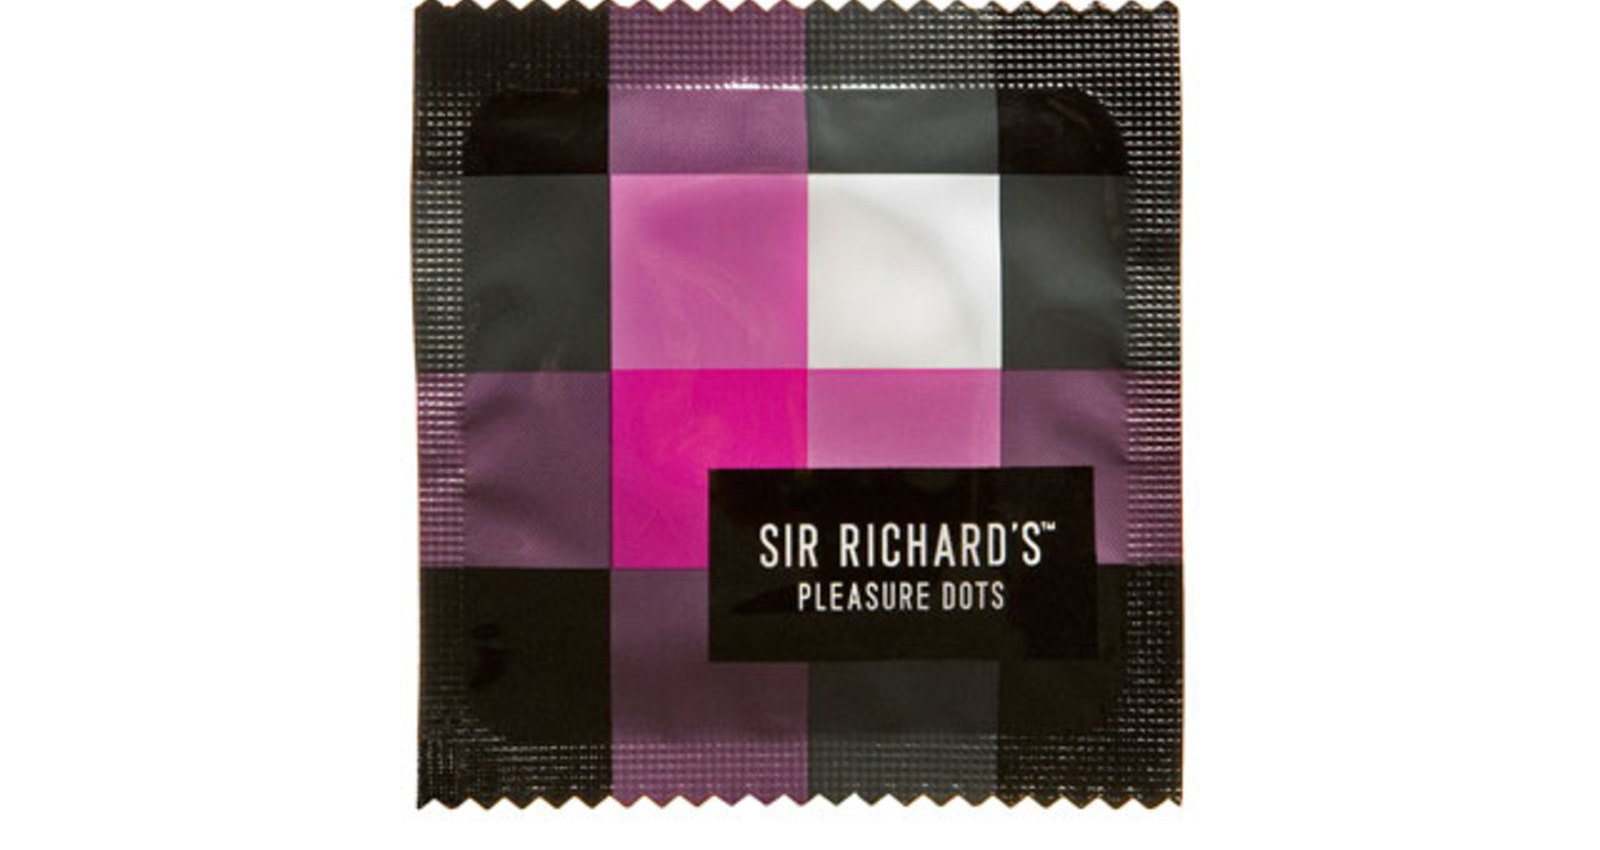 Sir Richard's Package Design